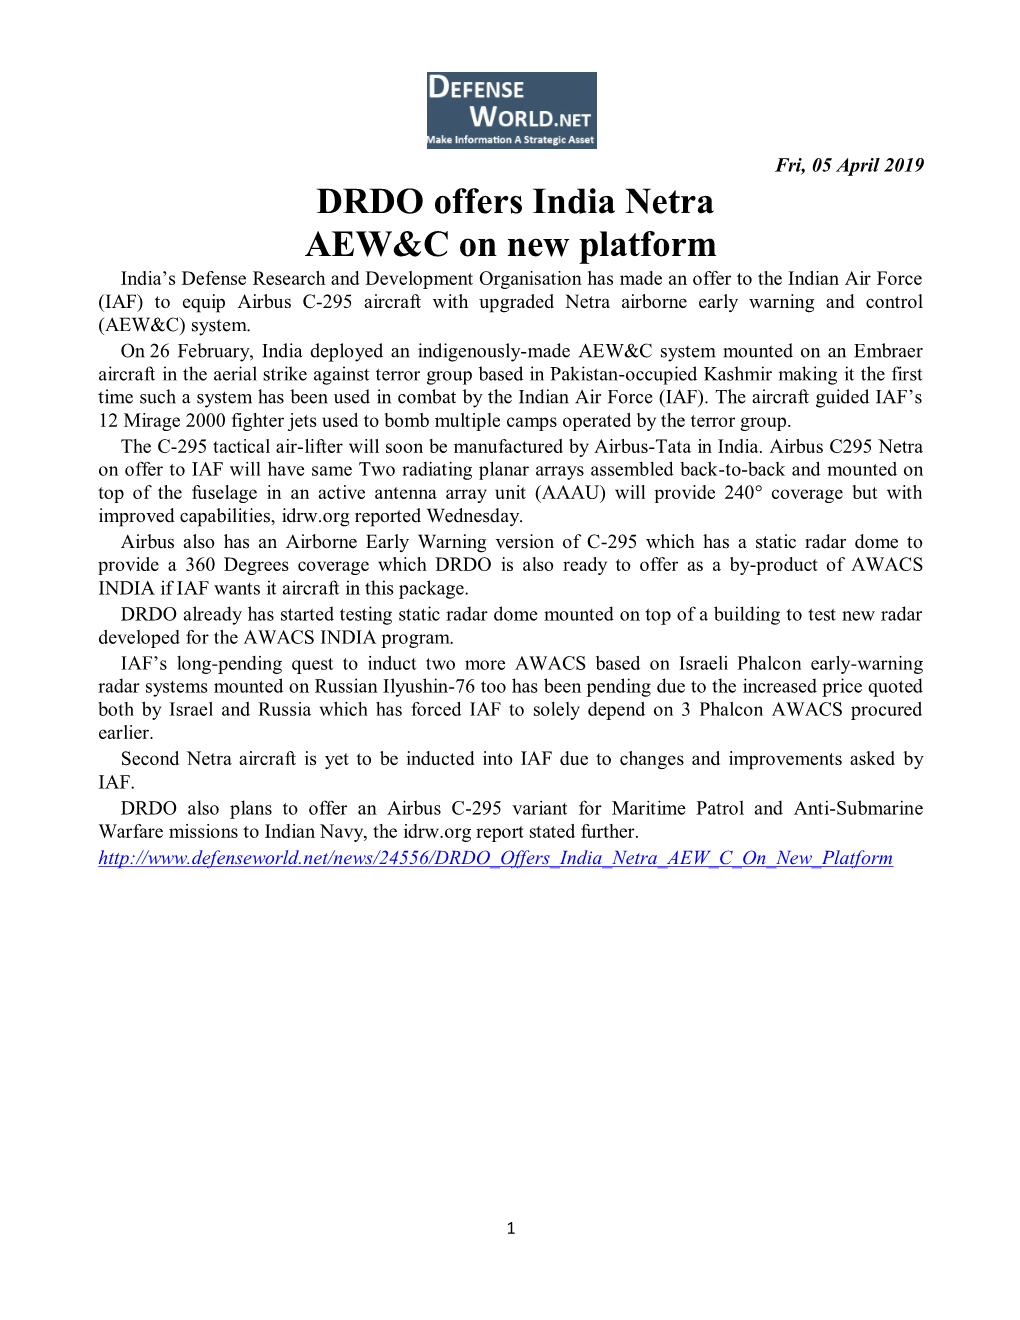 DRDO Offers India Netra AEW&C on New Platform